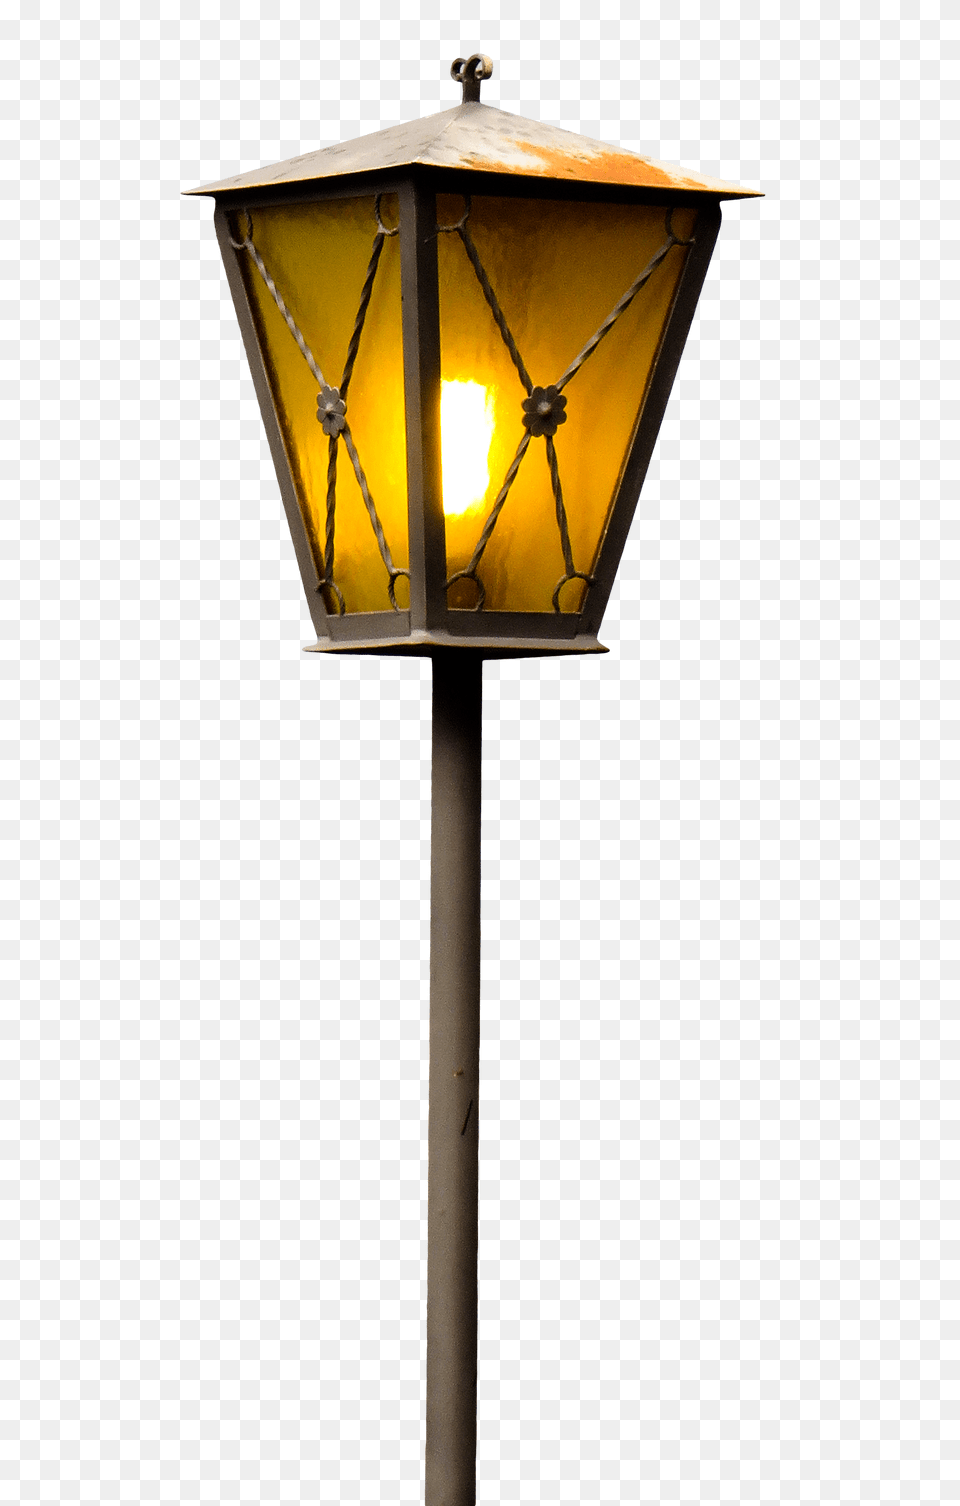 Download Street Light File Hq Image Street Lamp Light, Lampshade, Mailbox, Lamp Post Free Png